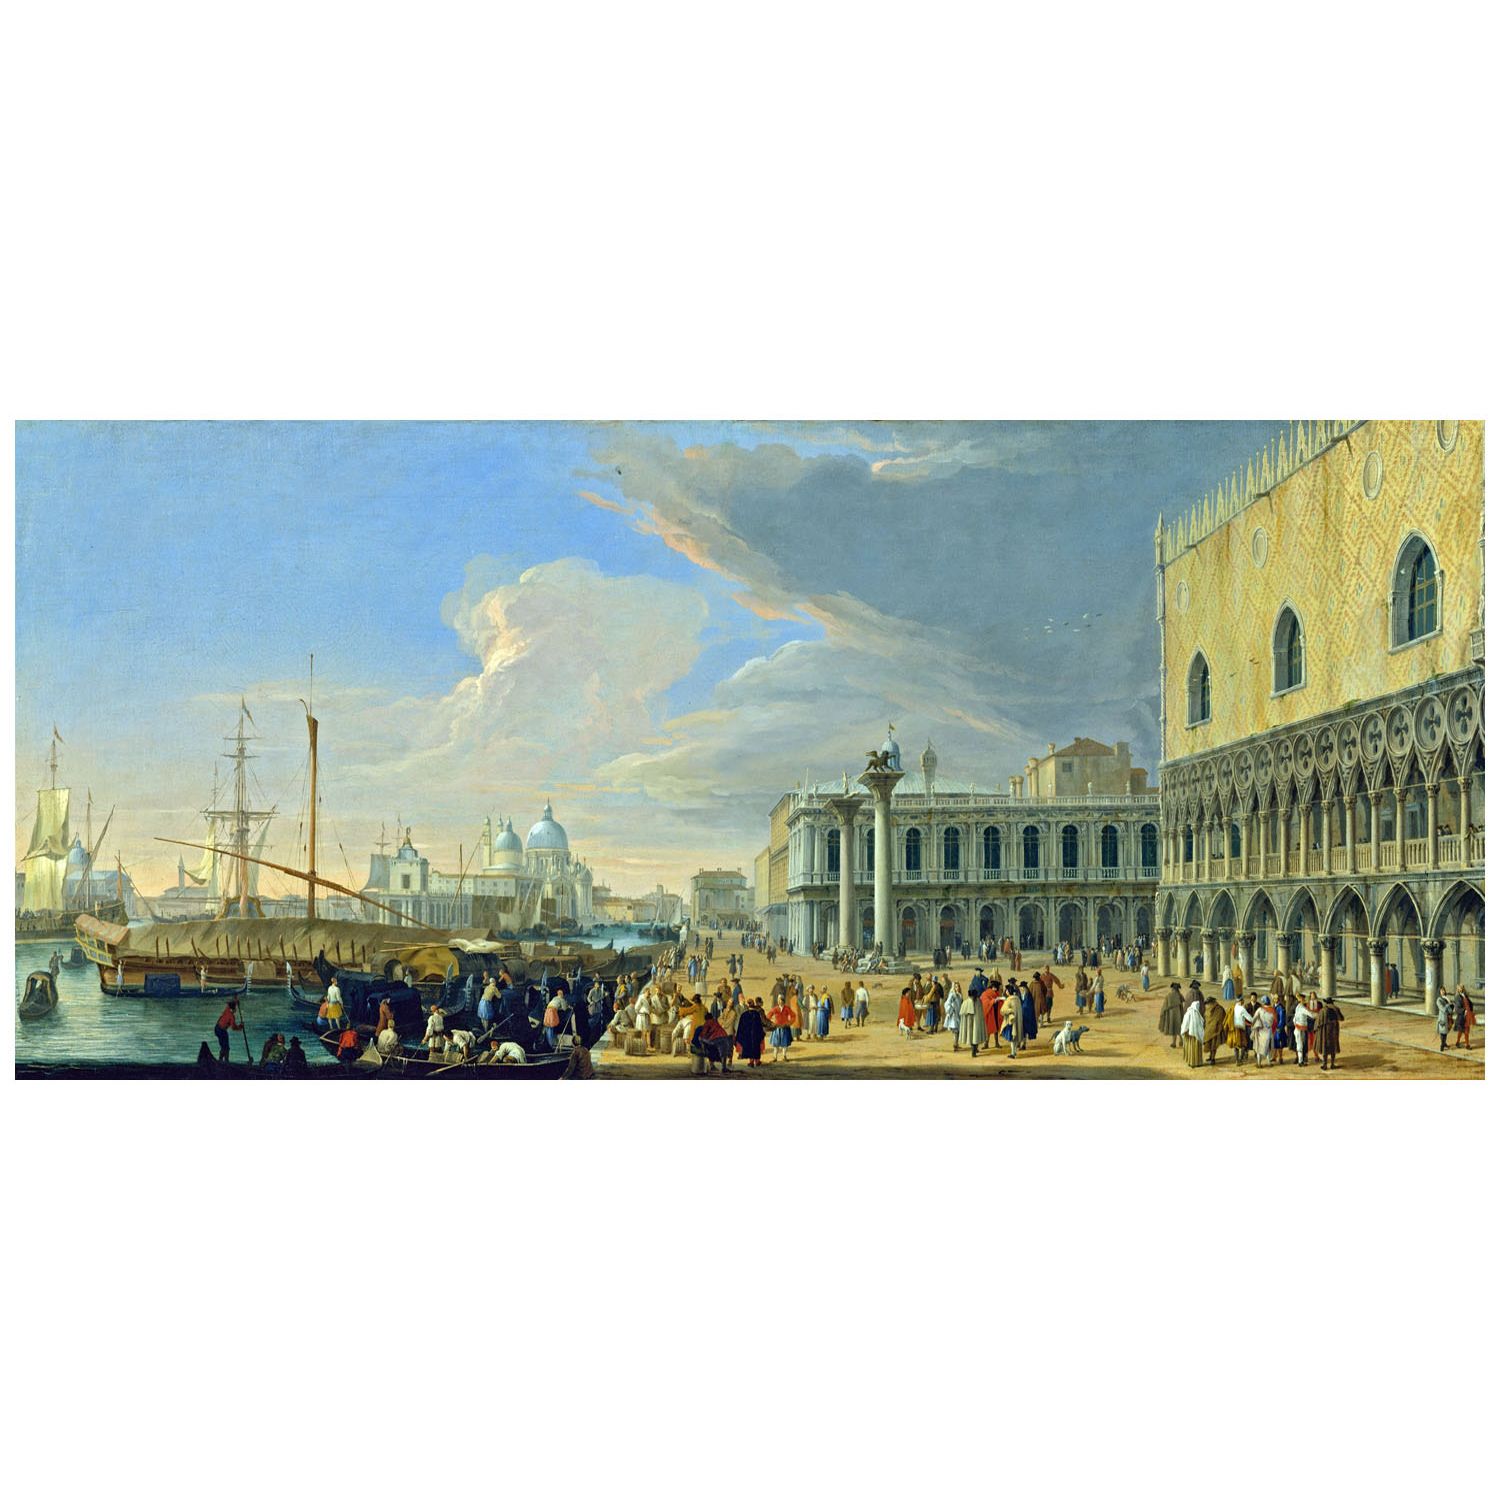 Luca Carlevarijs. Il Molo verso ovest. 1709. Metropolitan Museum of Art NY